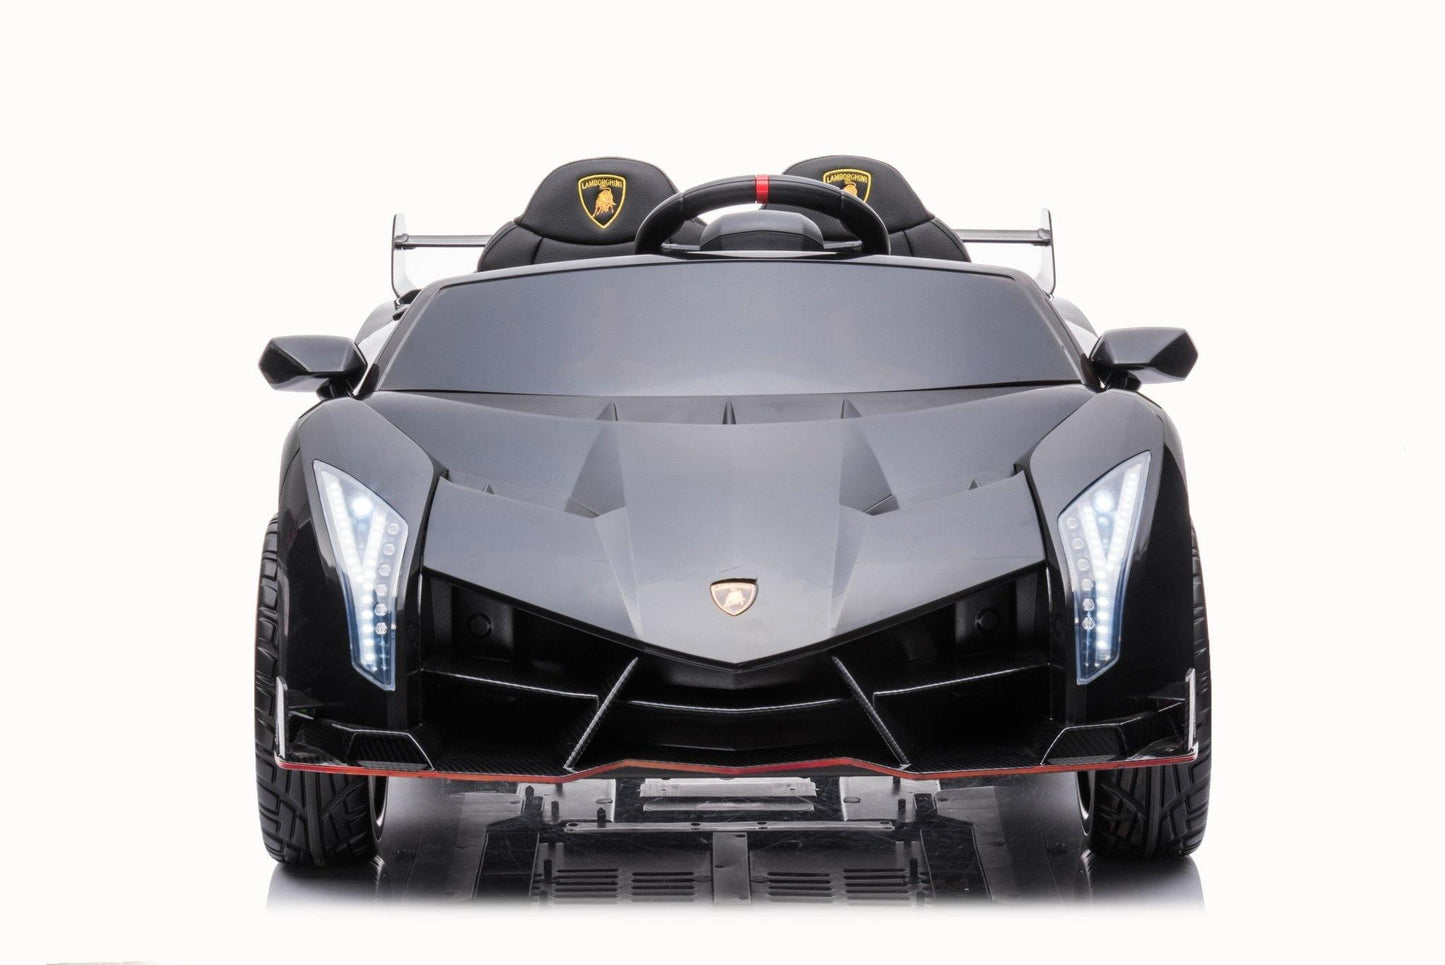 Freddo Toys Lamborghini Veneno